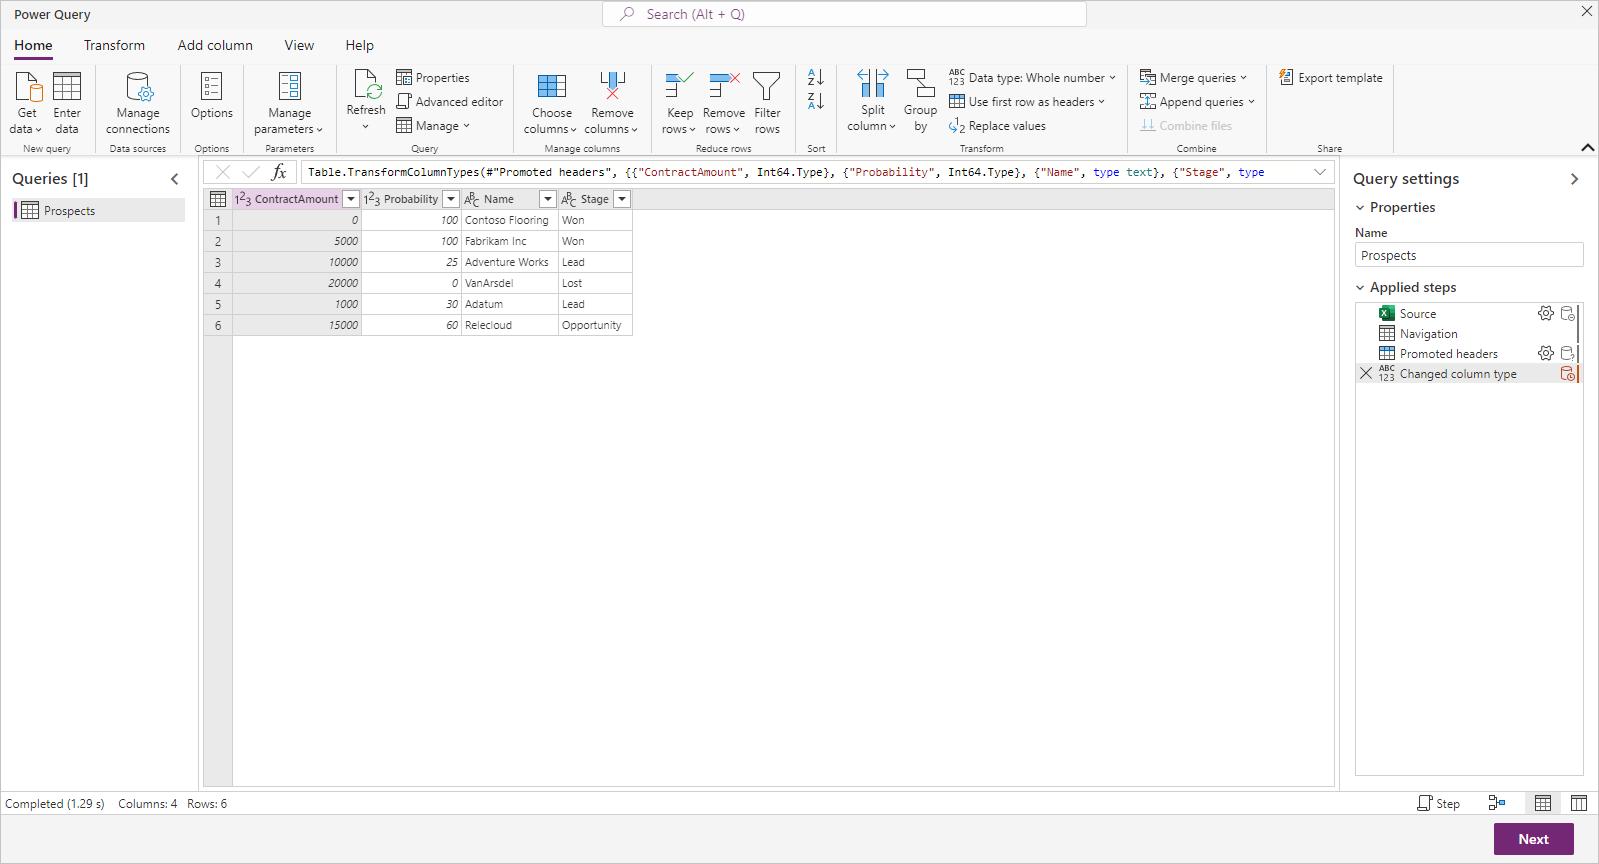 Screenshot of Power Query window showing data shaping options.